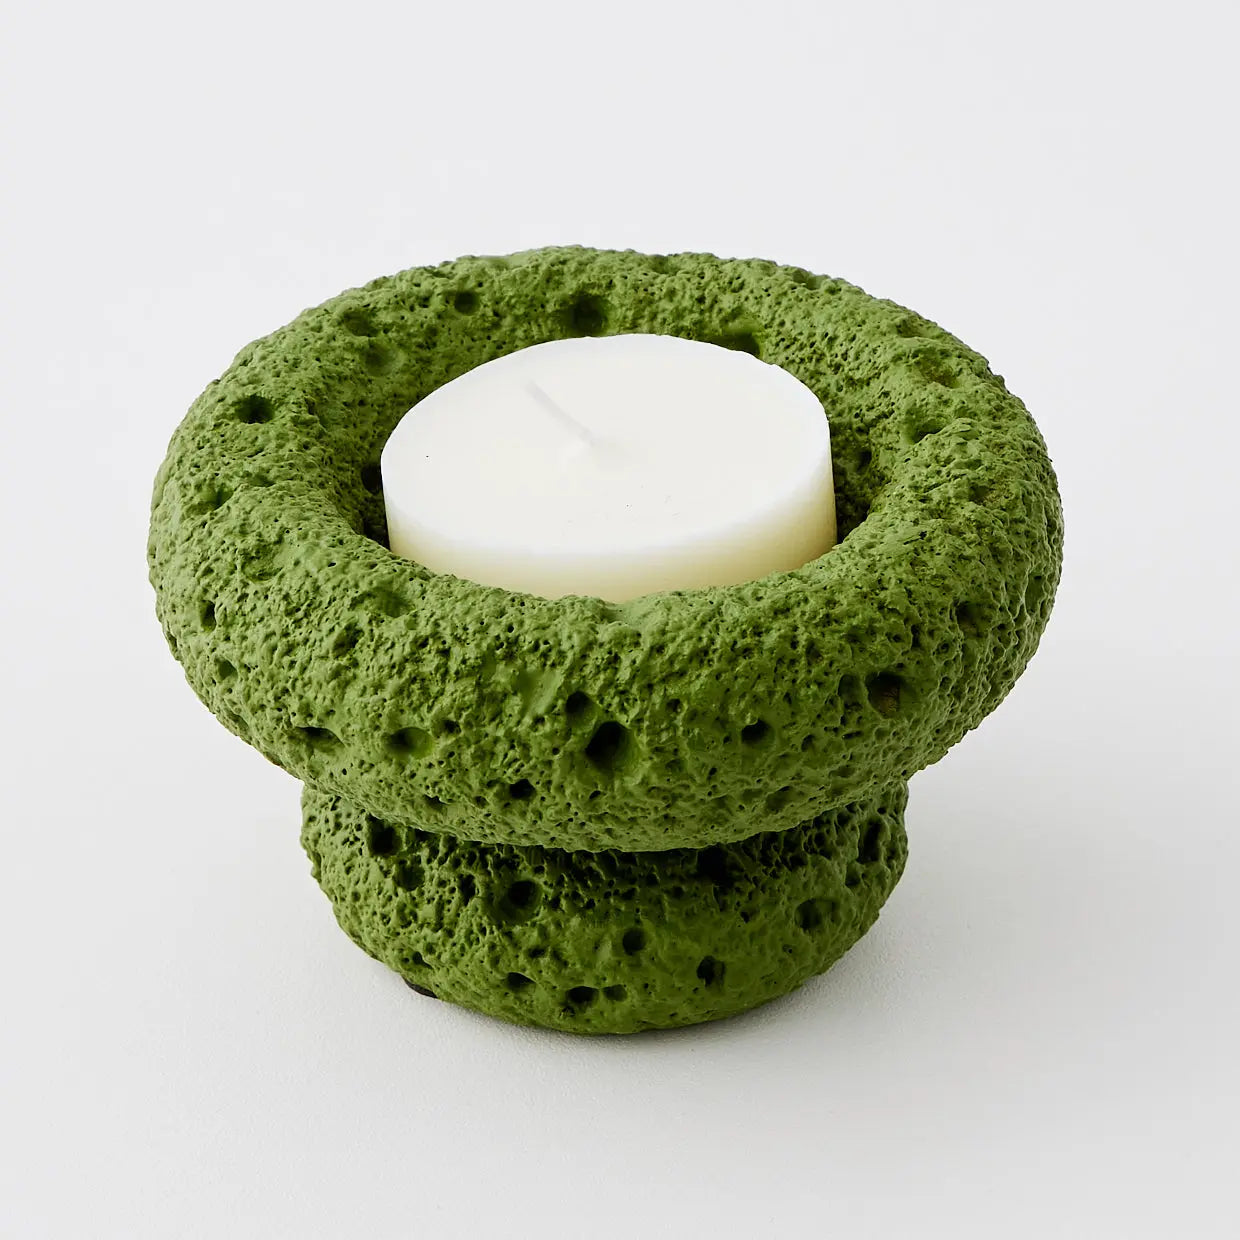 Textured Cement Candle Holder Green - GigiandTom